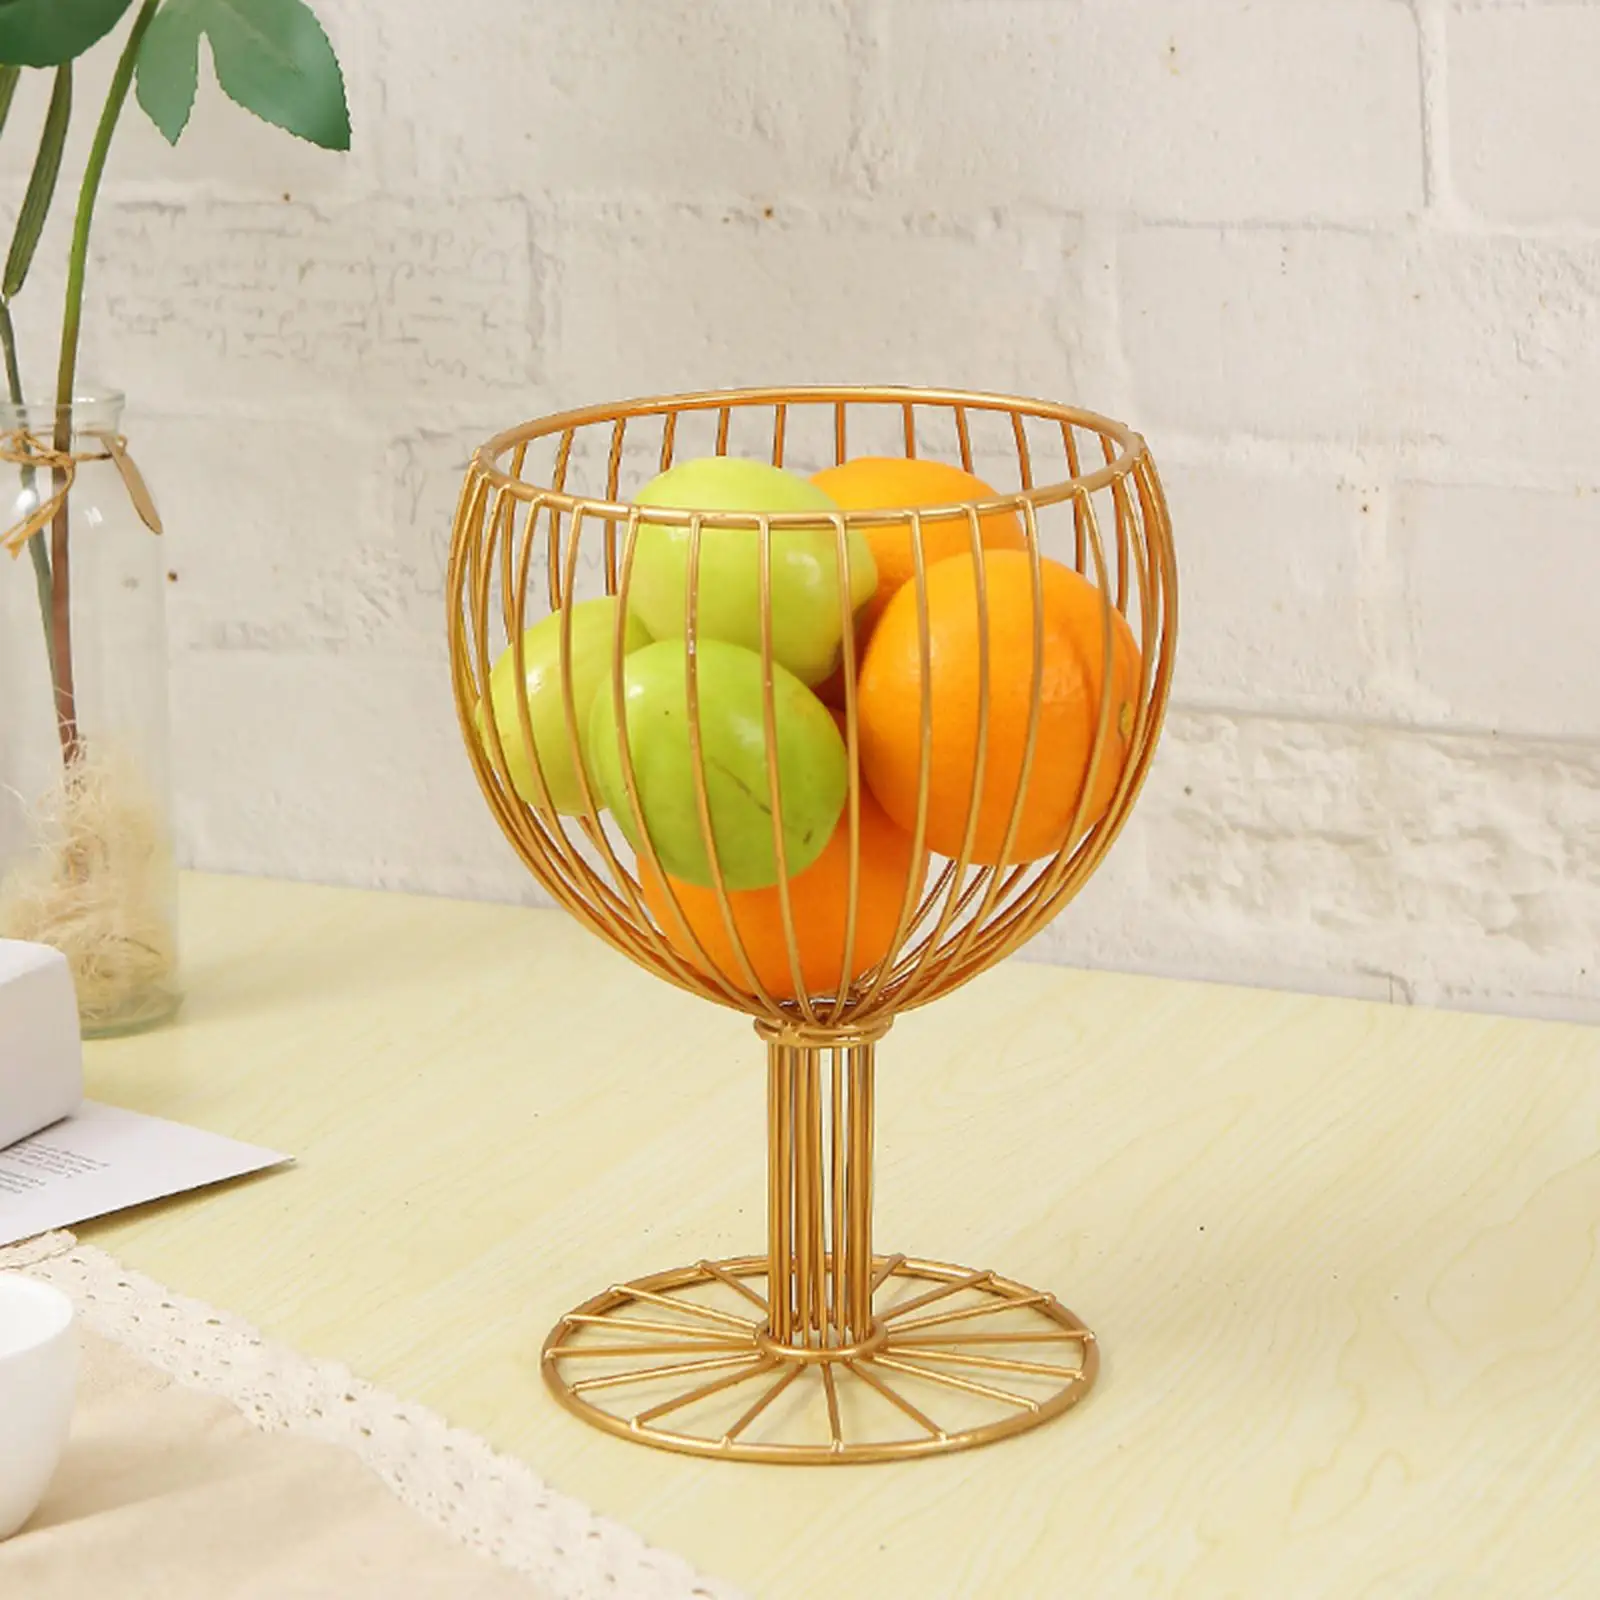 Iron Art Fruit Basket Bowl Table Display Plate Sundries Stuff Organization